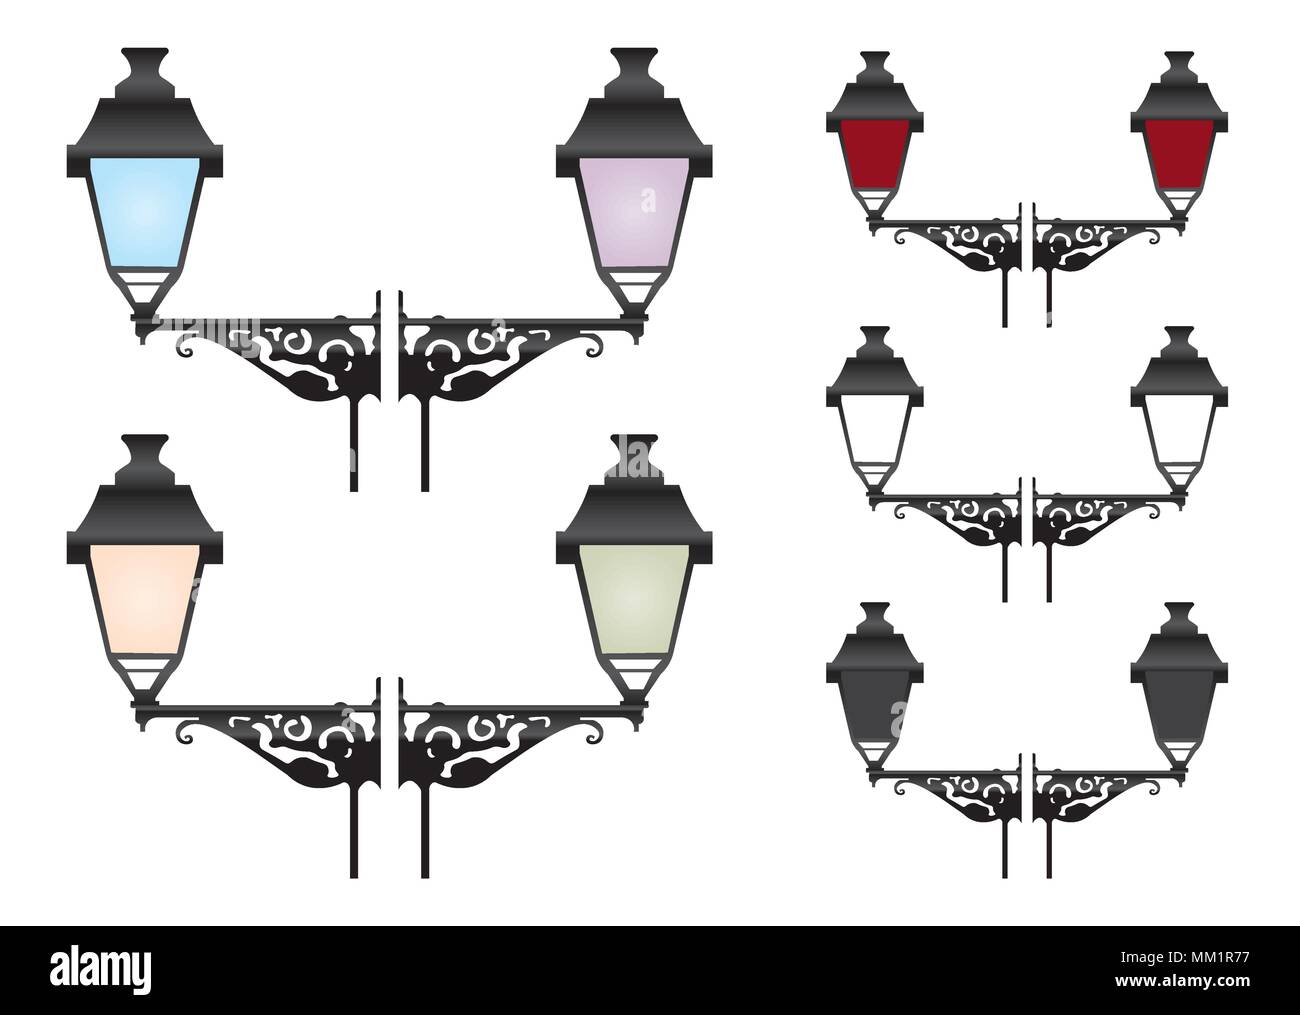 Old historic street lamps vector illustration Stock Vector